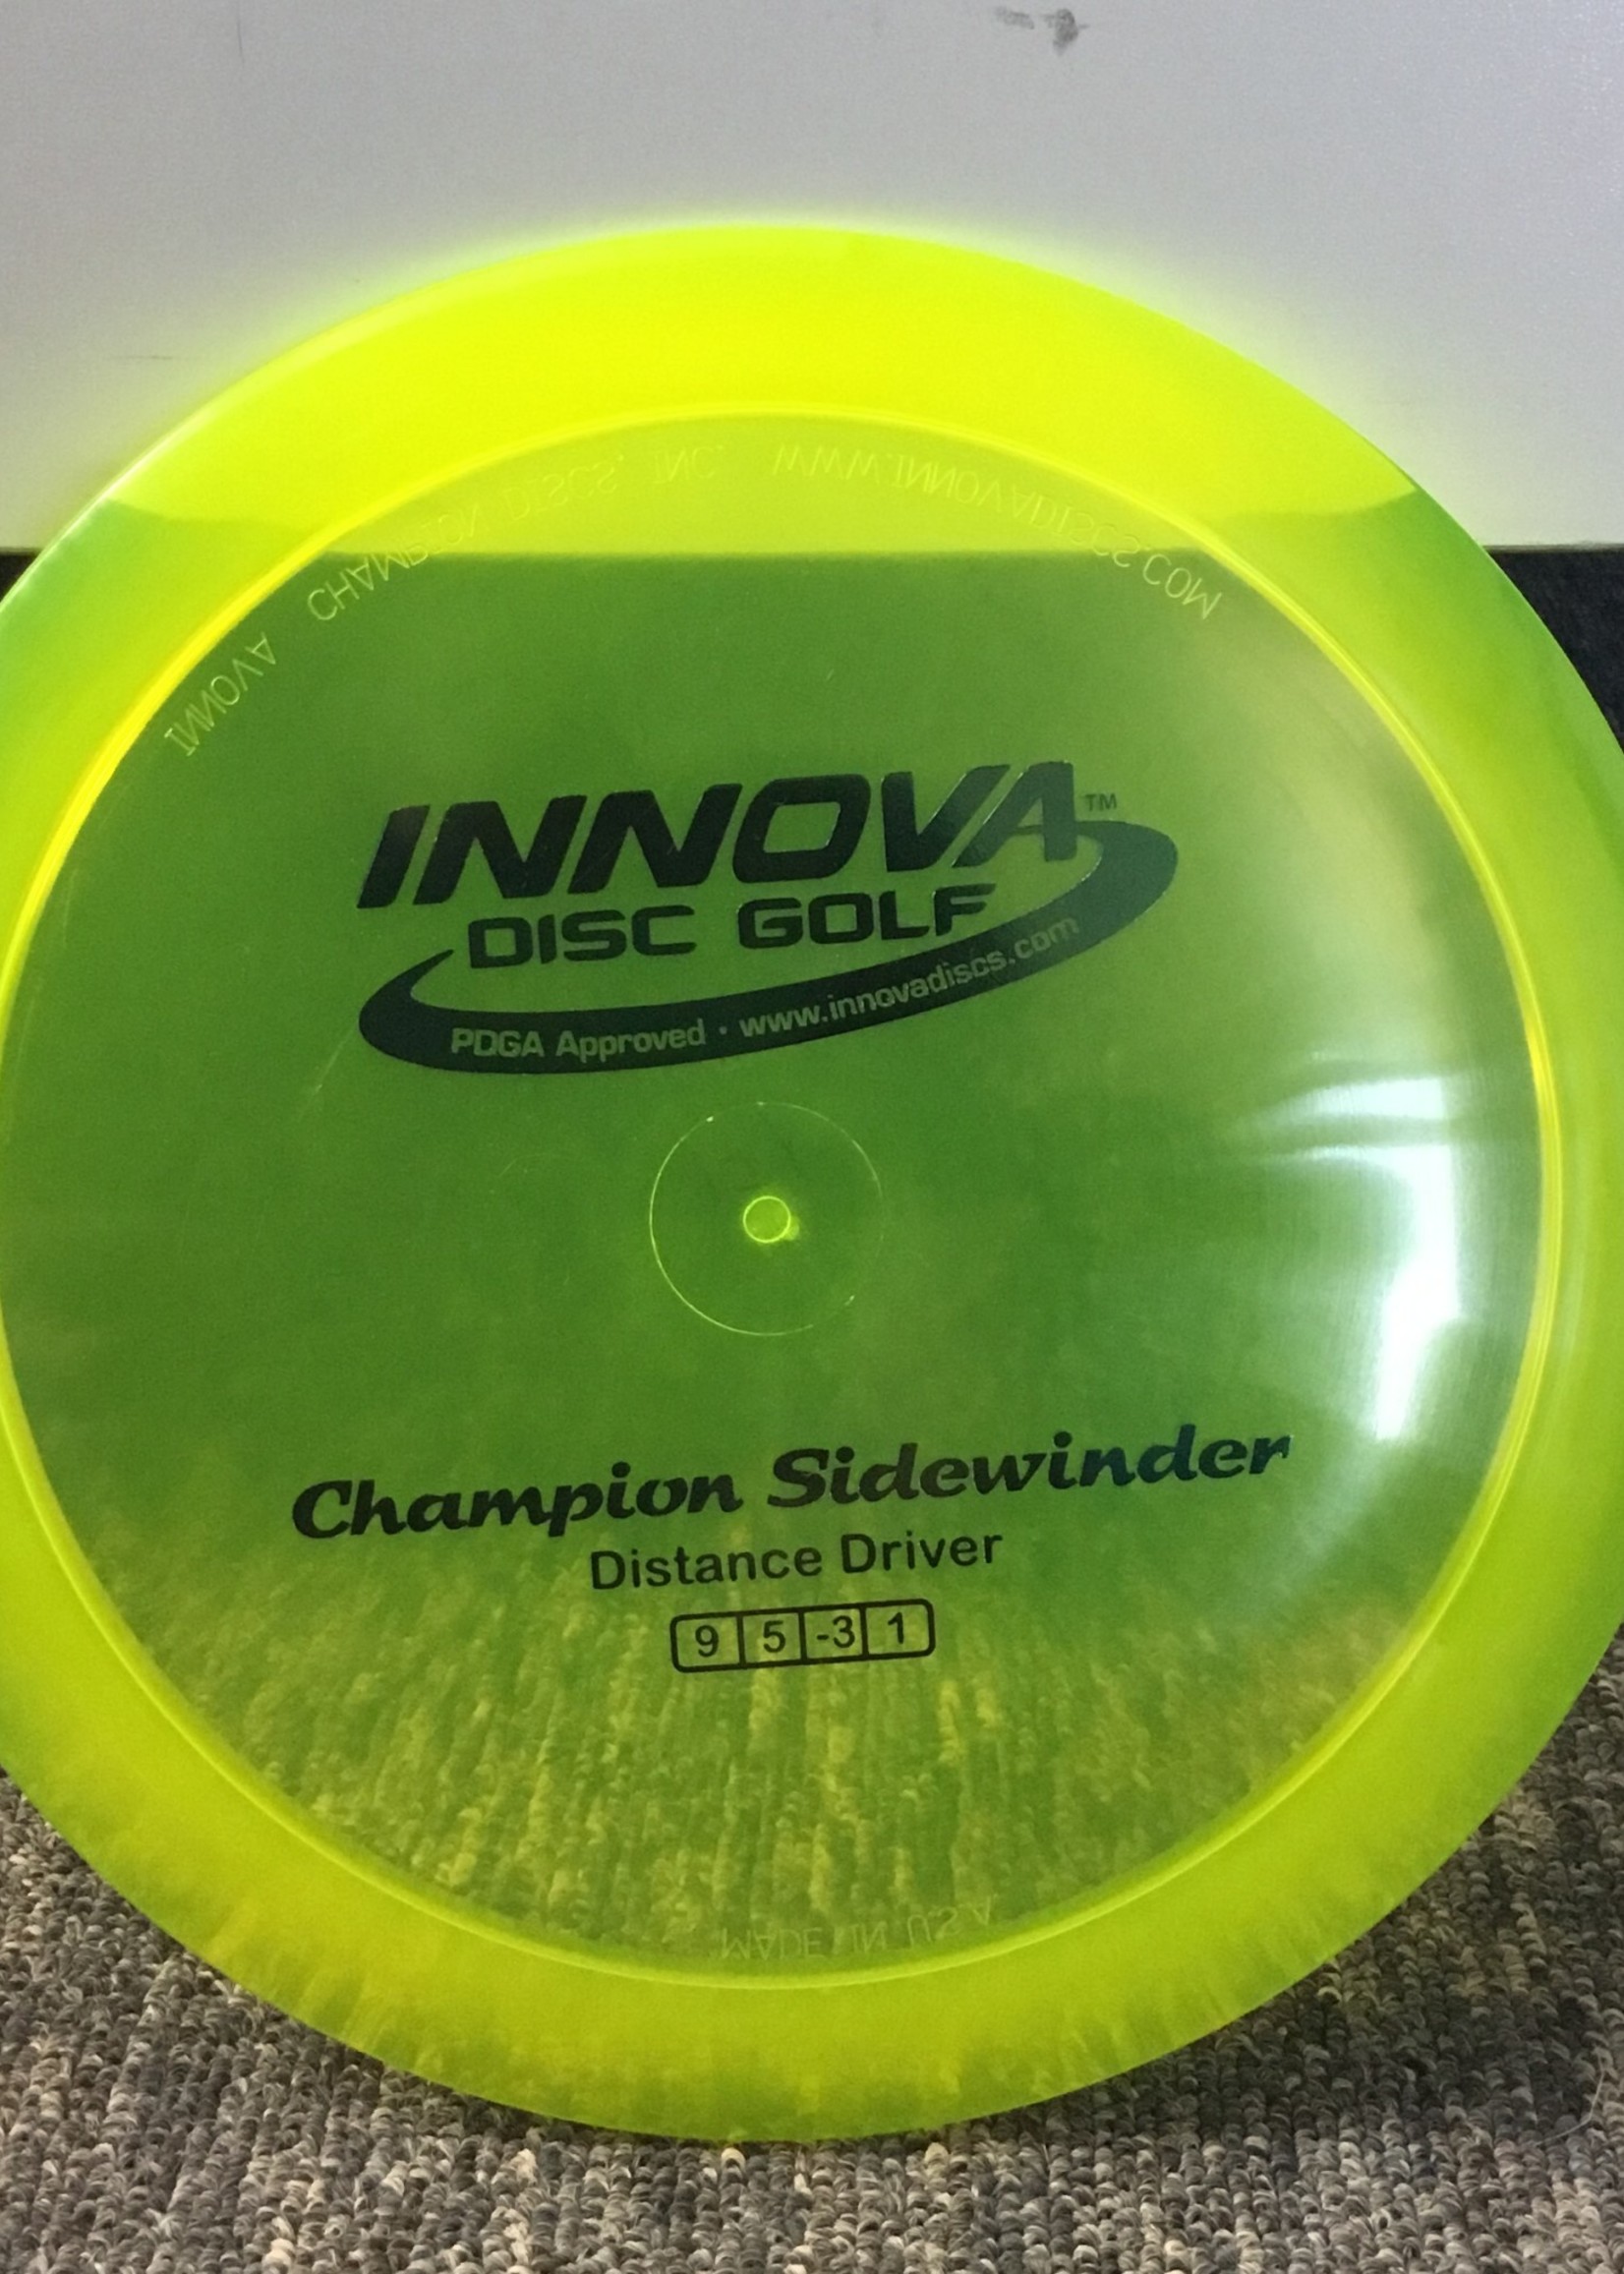 Innova Innova Sidewinder Driver 9/5/-3/1